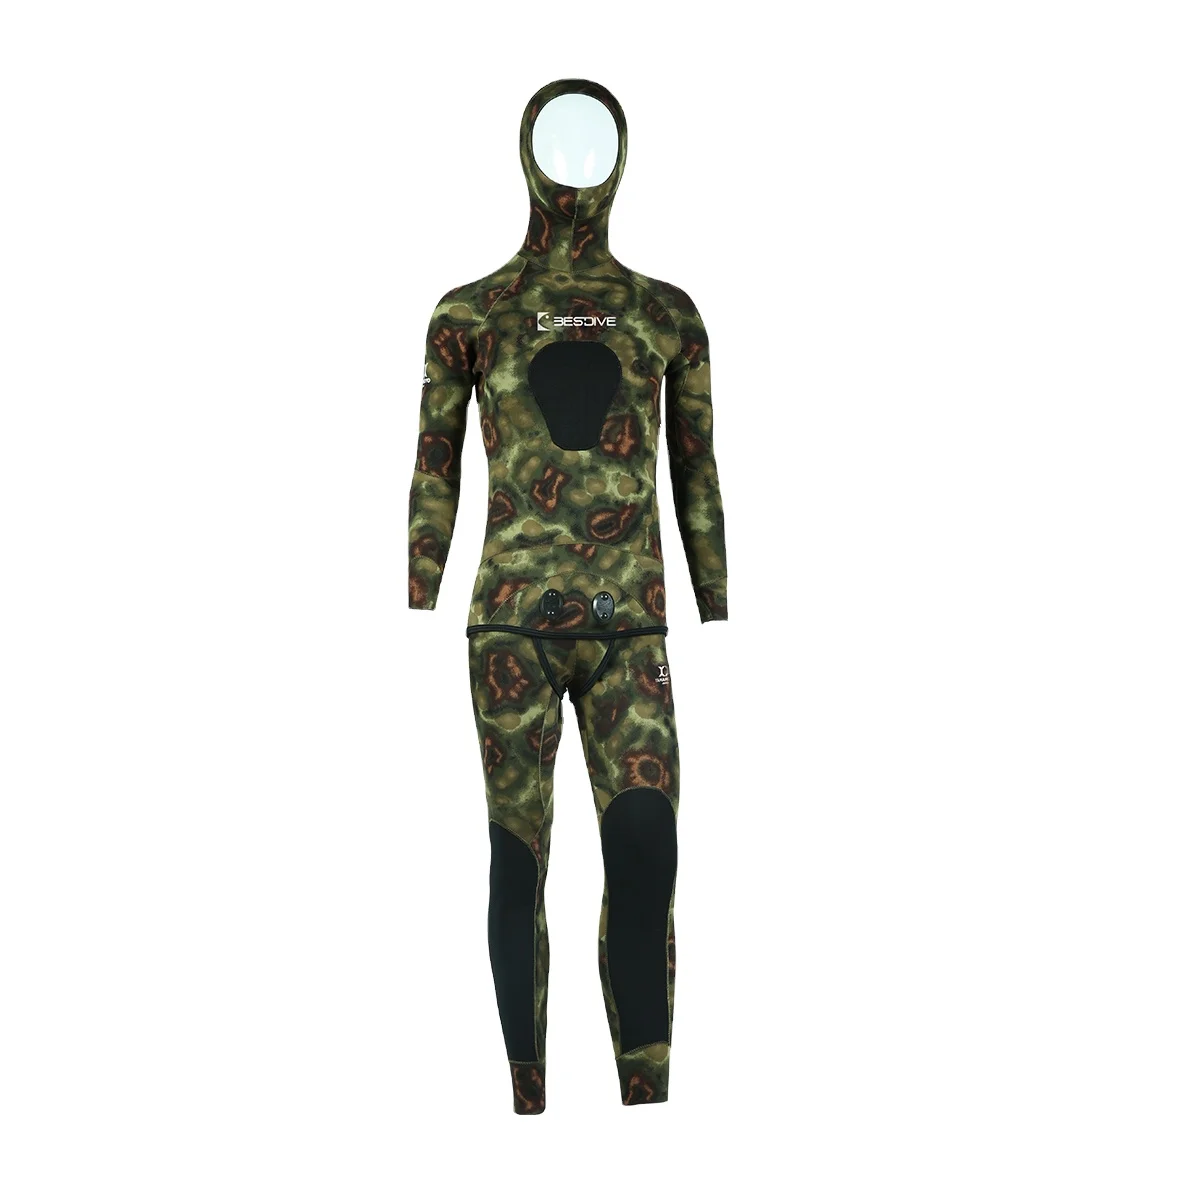 BESTDIVE Yamamoto Neoprene 5mm Two-piece Camouflage Spearfishing Wetsuit for Men